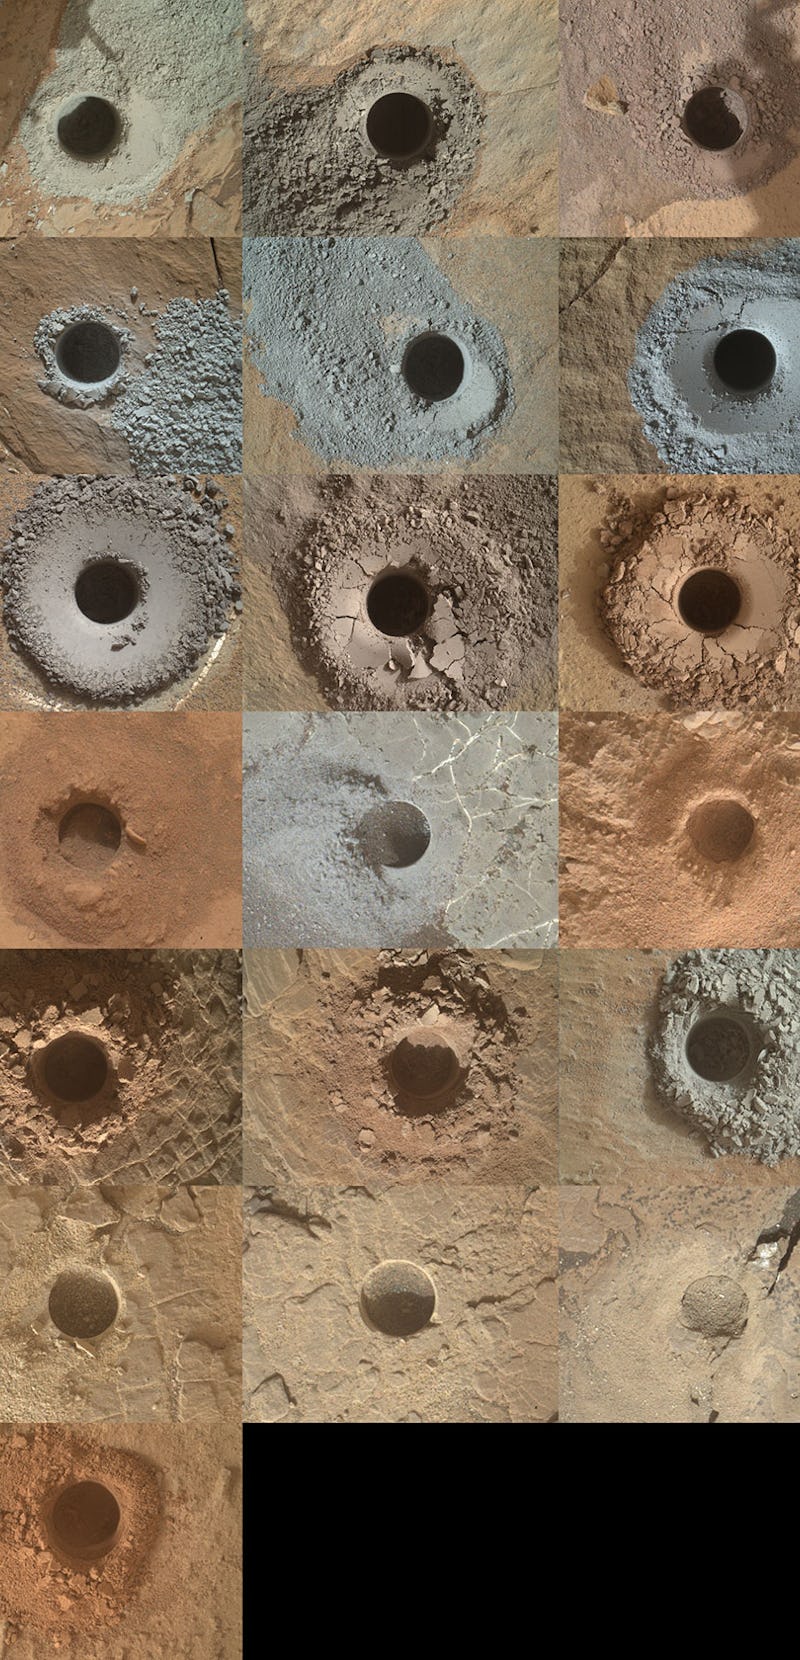 Curiosity drill holes